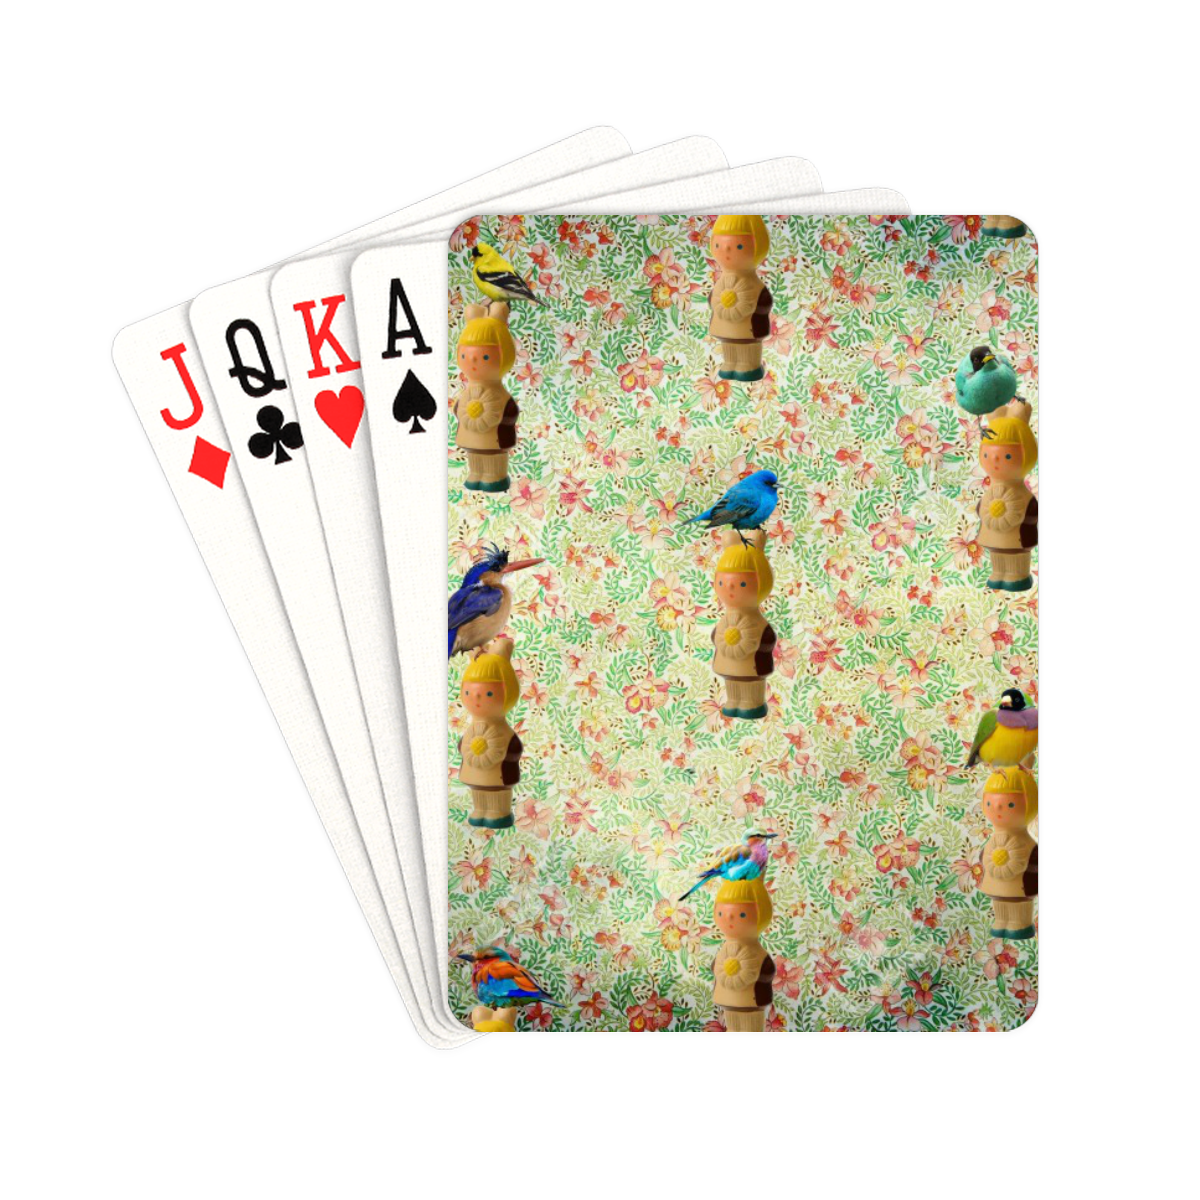 Daisy's Birds Playing Cards 2.5"x3.5"